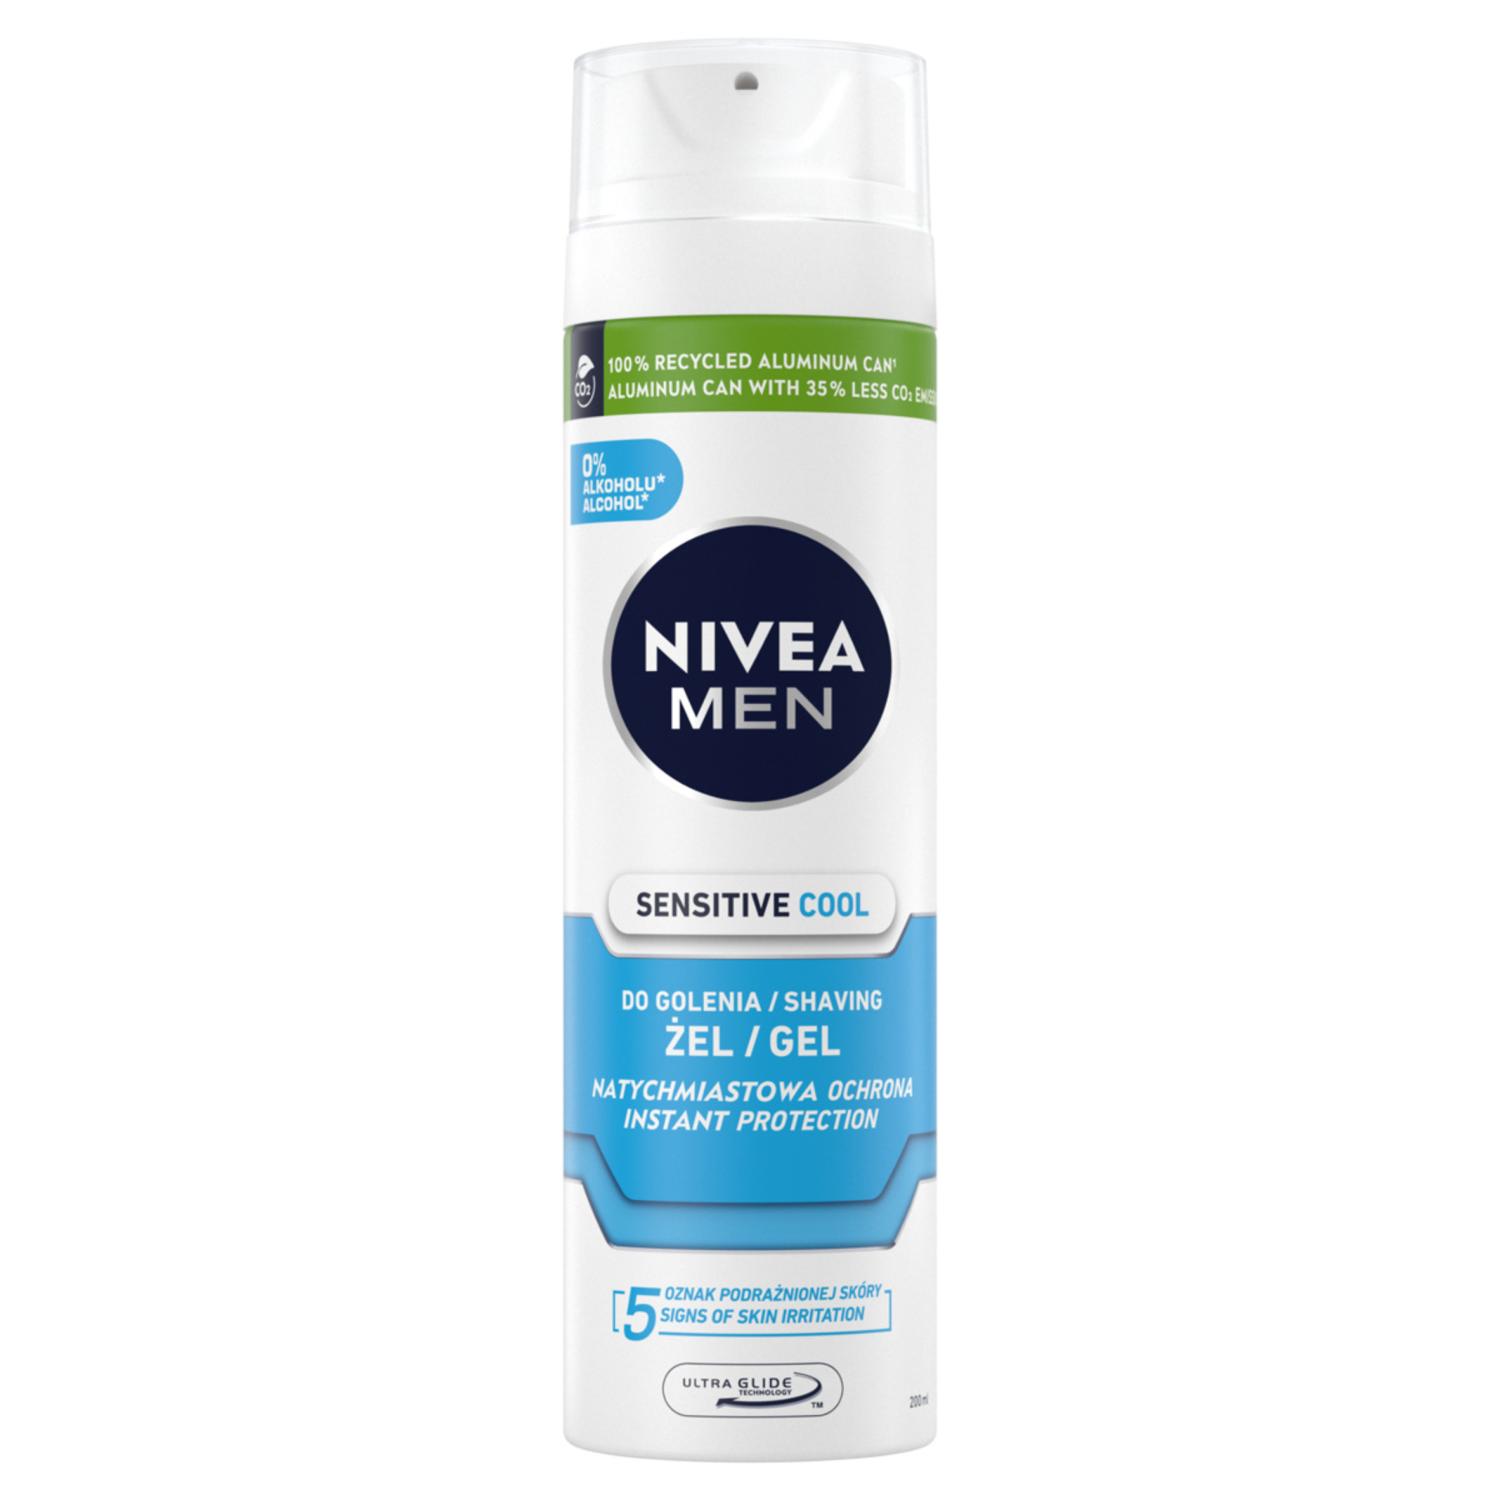 Nivea Men Sensitive охлаждающий гель для бритья, 200 мл